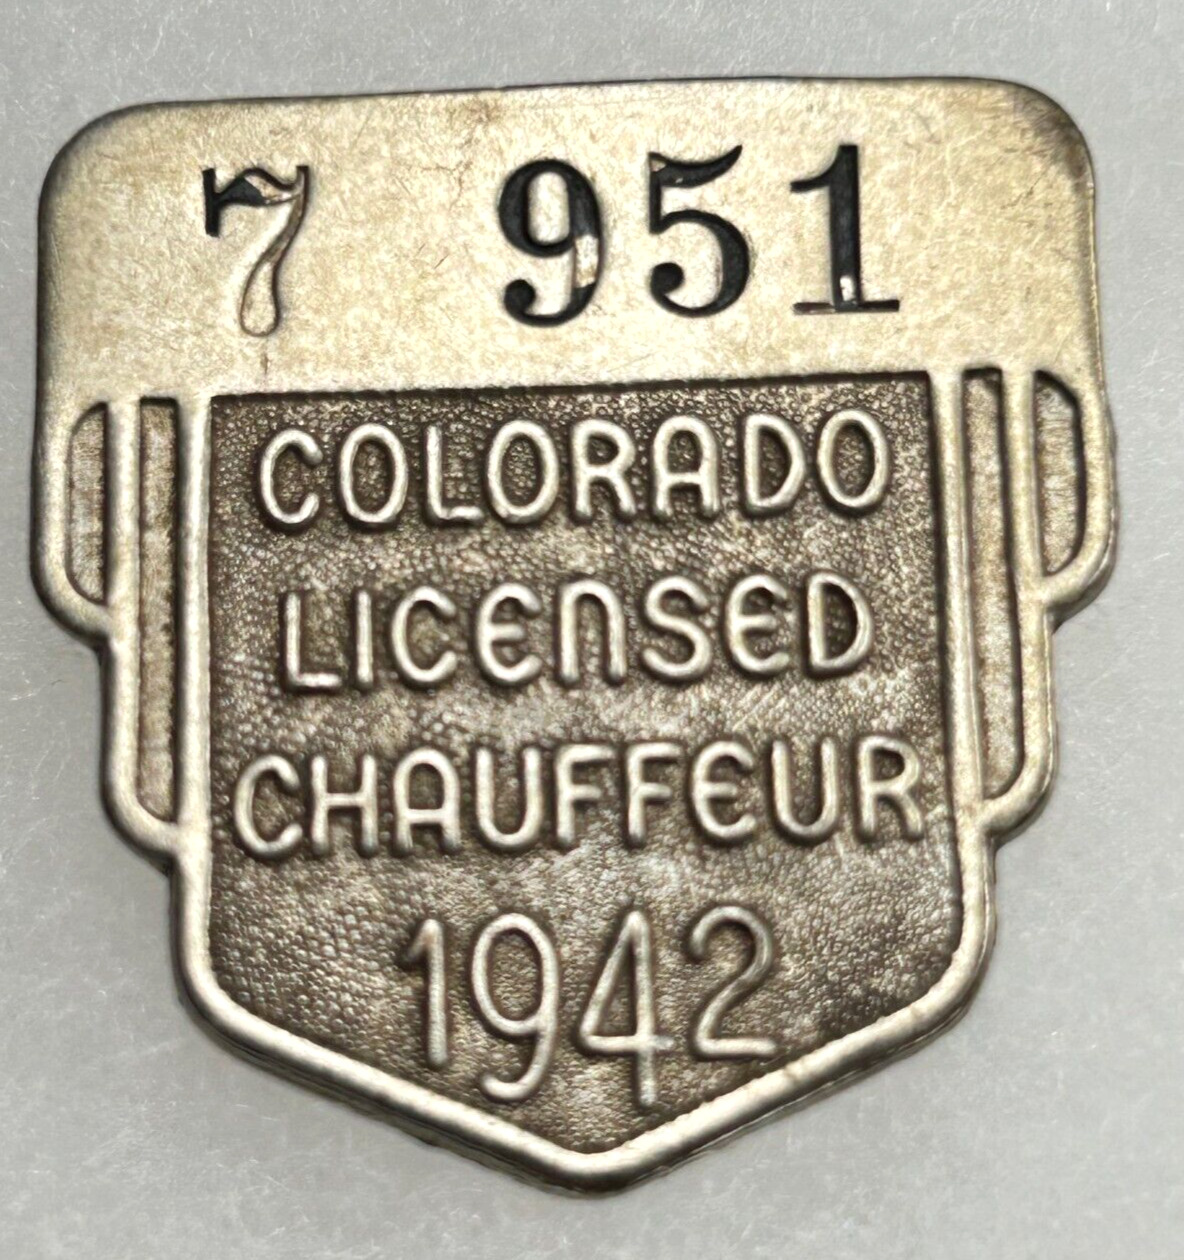 1942 Colorado Chauffeur Badge #7-951